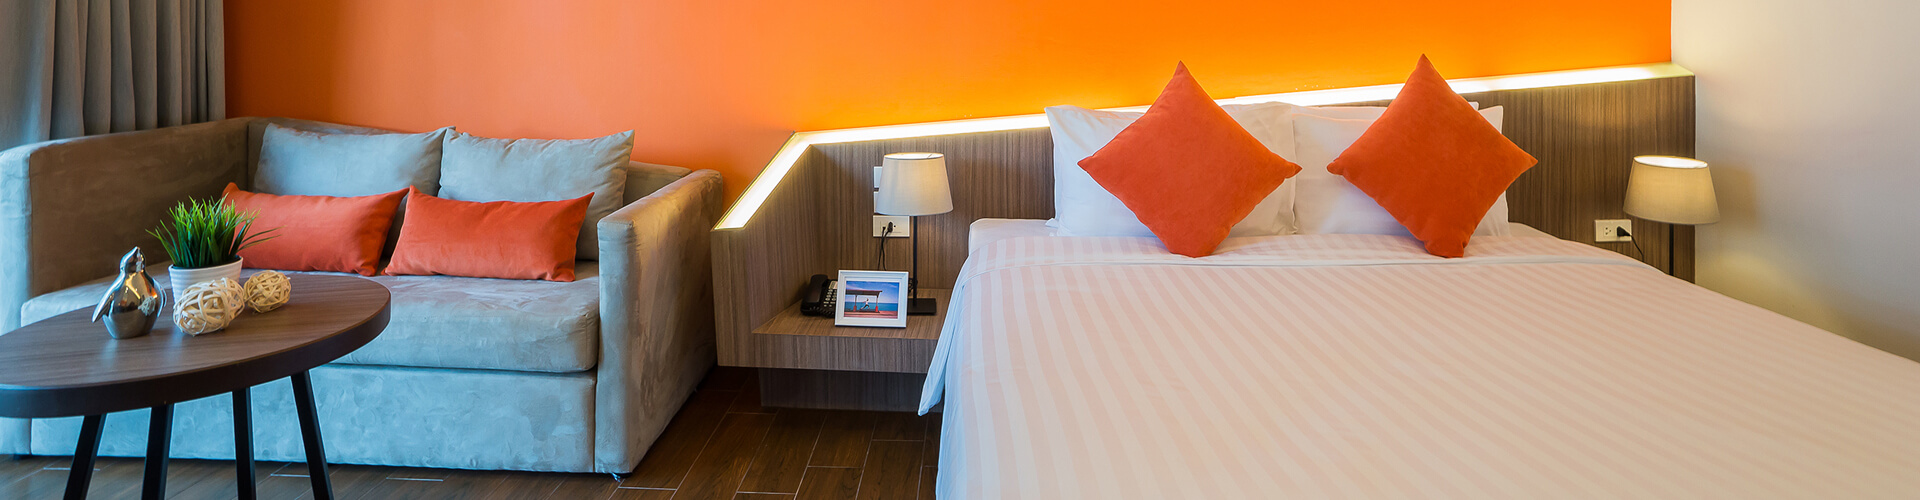 Hotel J Pattaya: Facilities